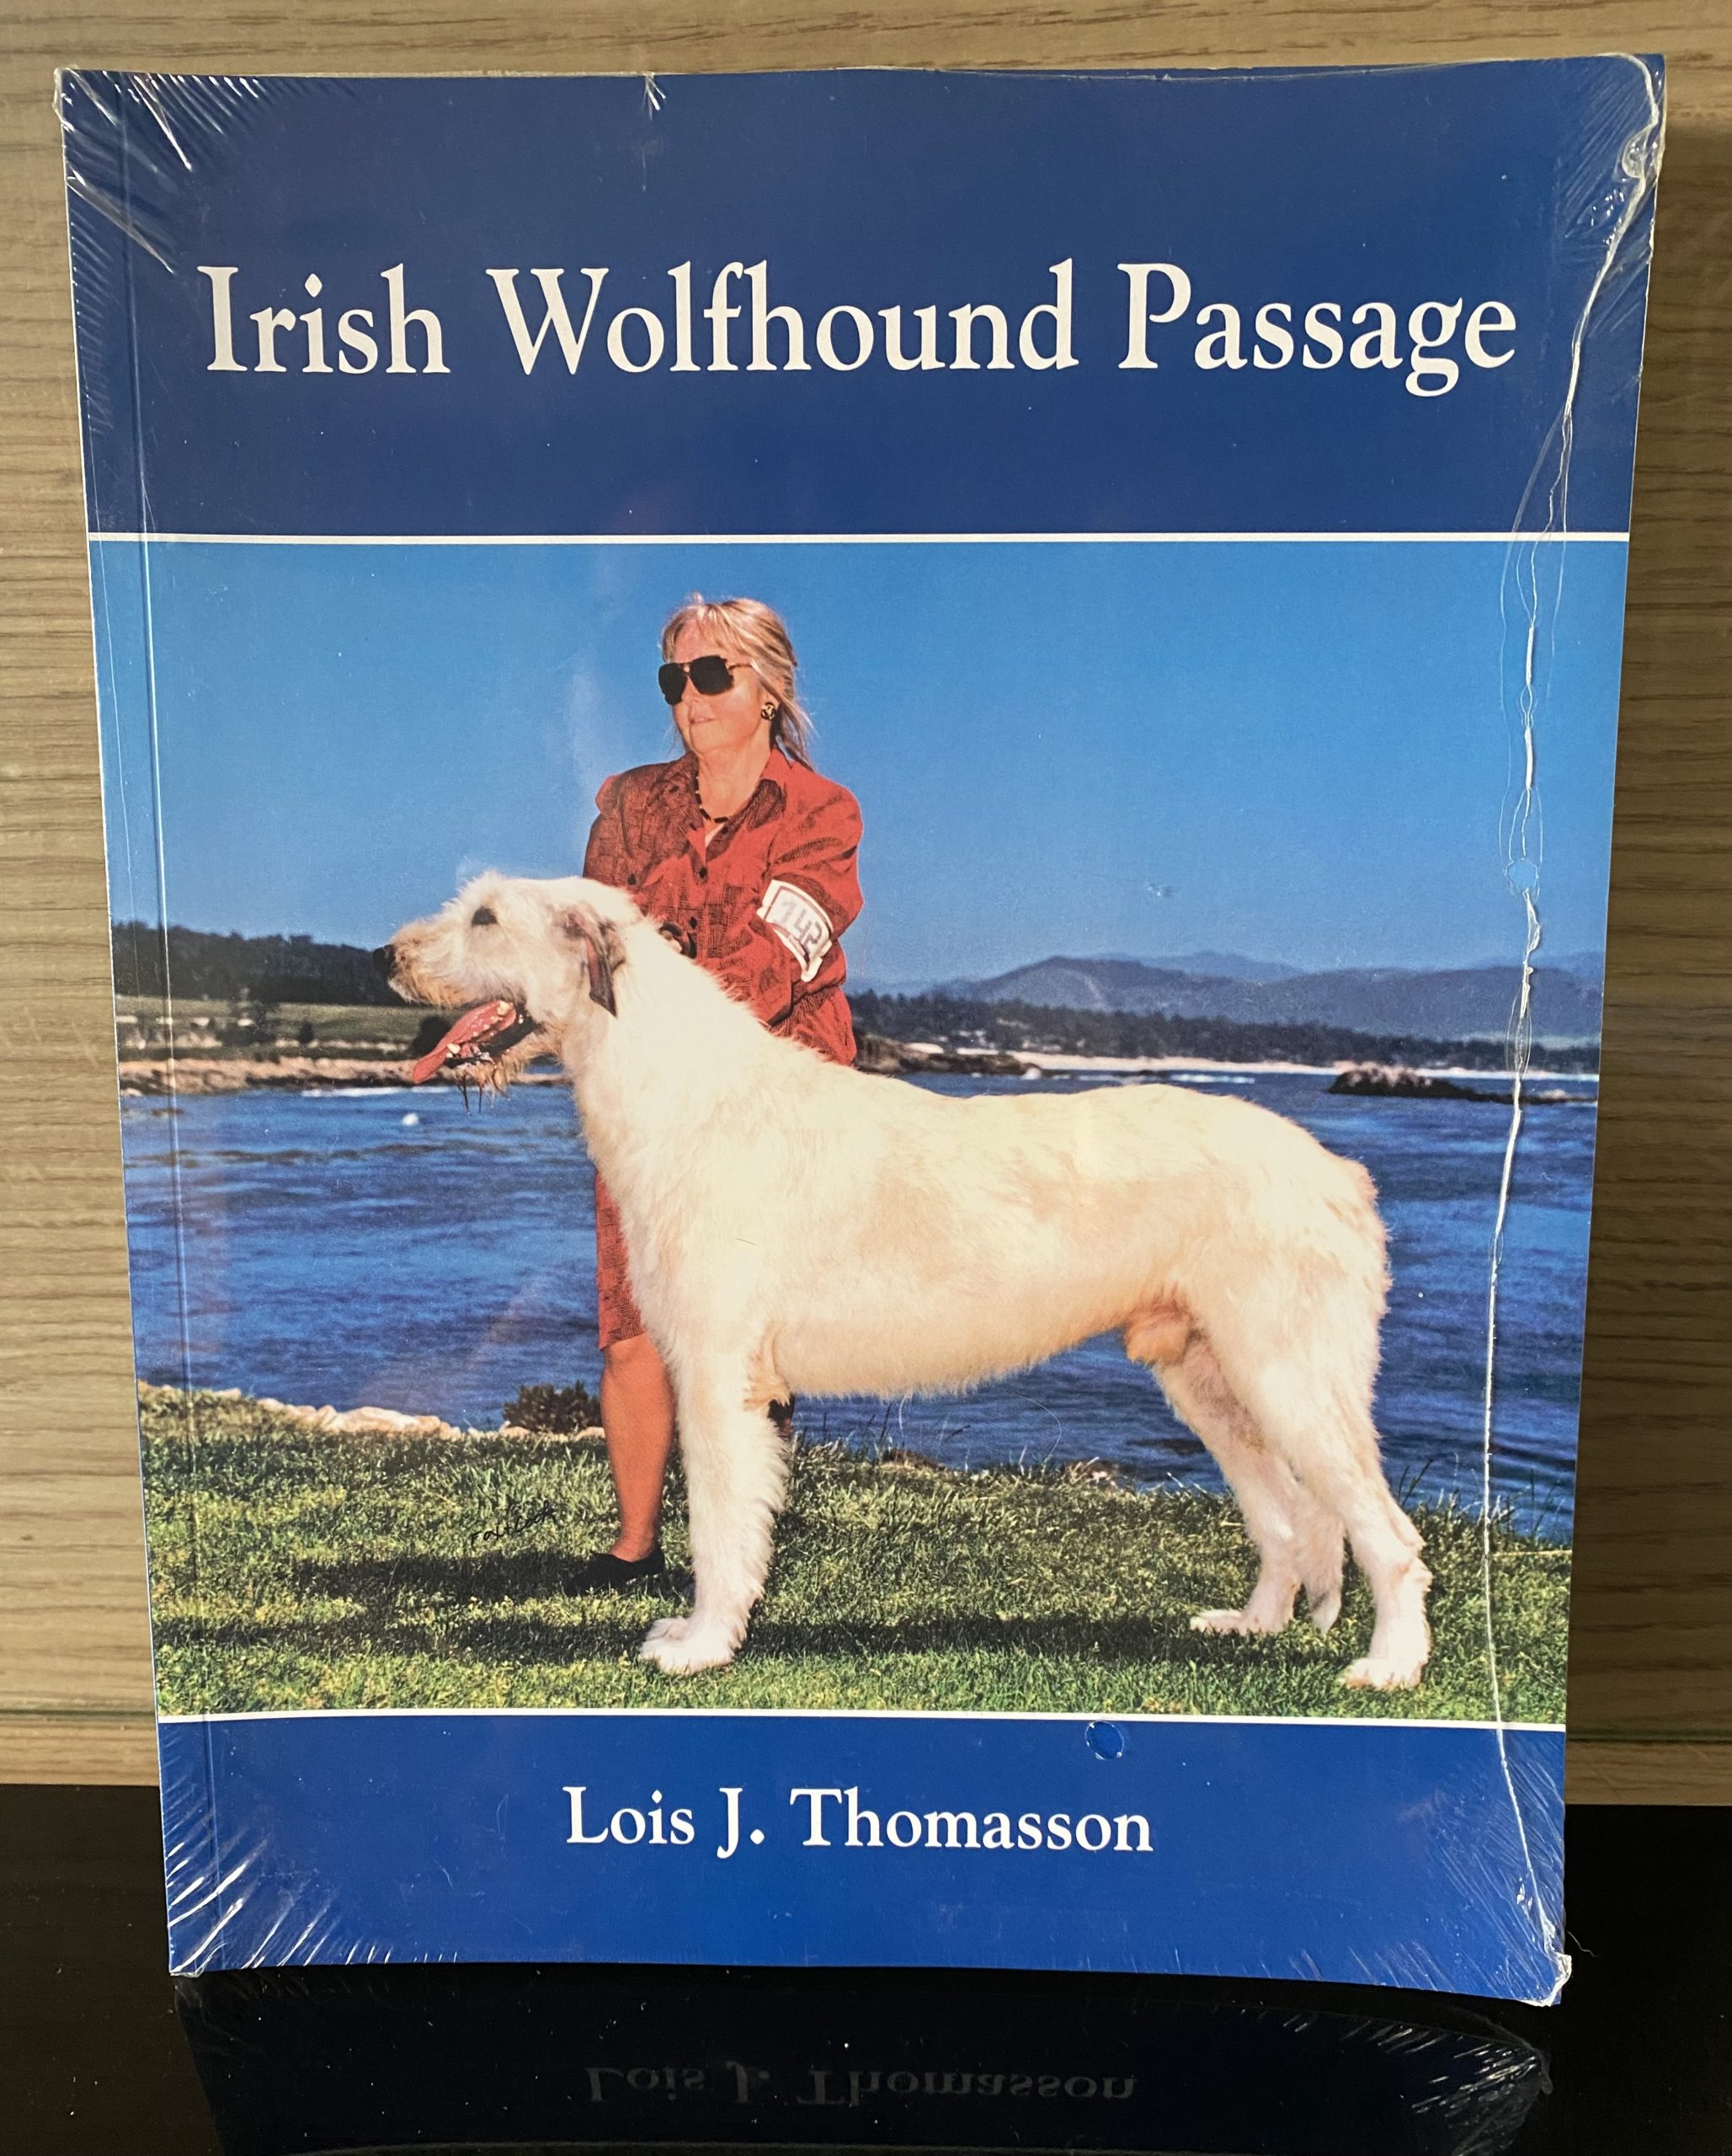 Irish Wolfhound Passage by Lois J Thomasson (sealed book) (16)